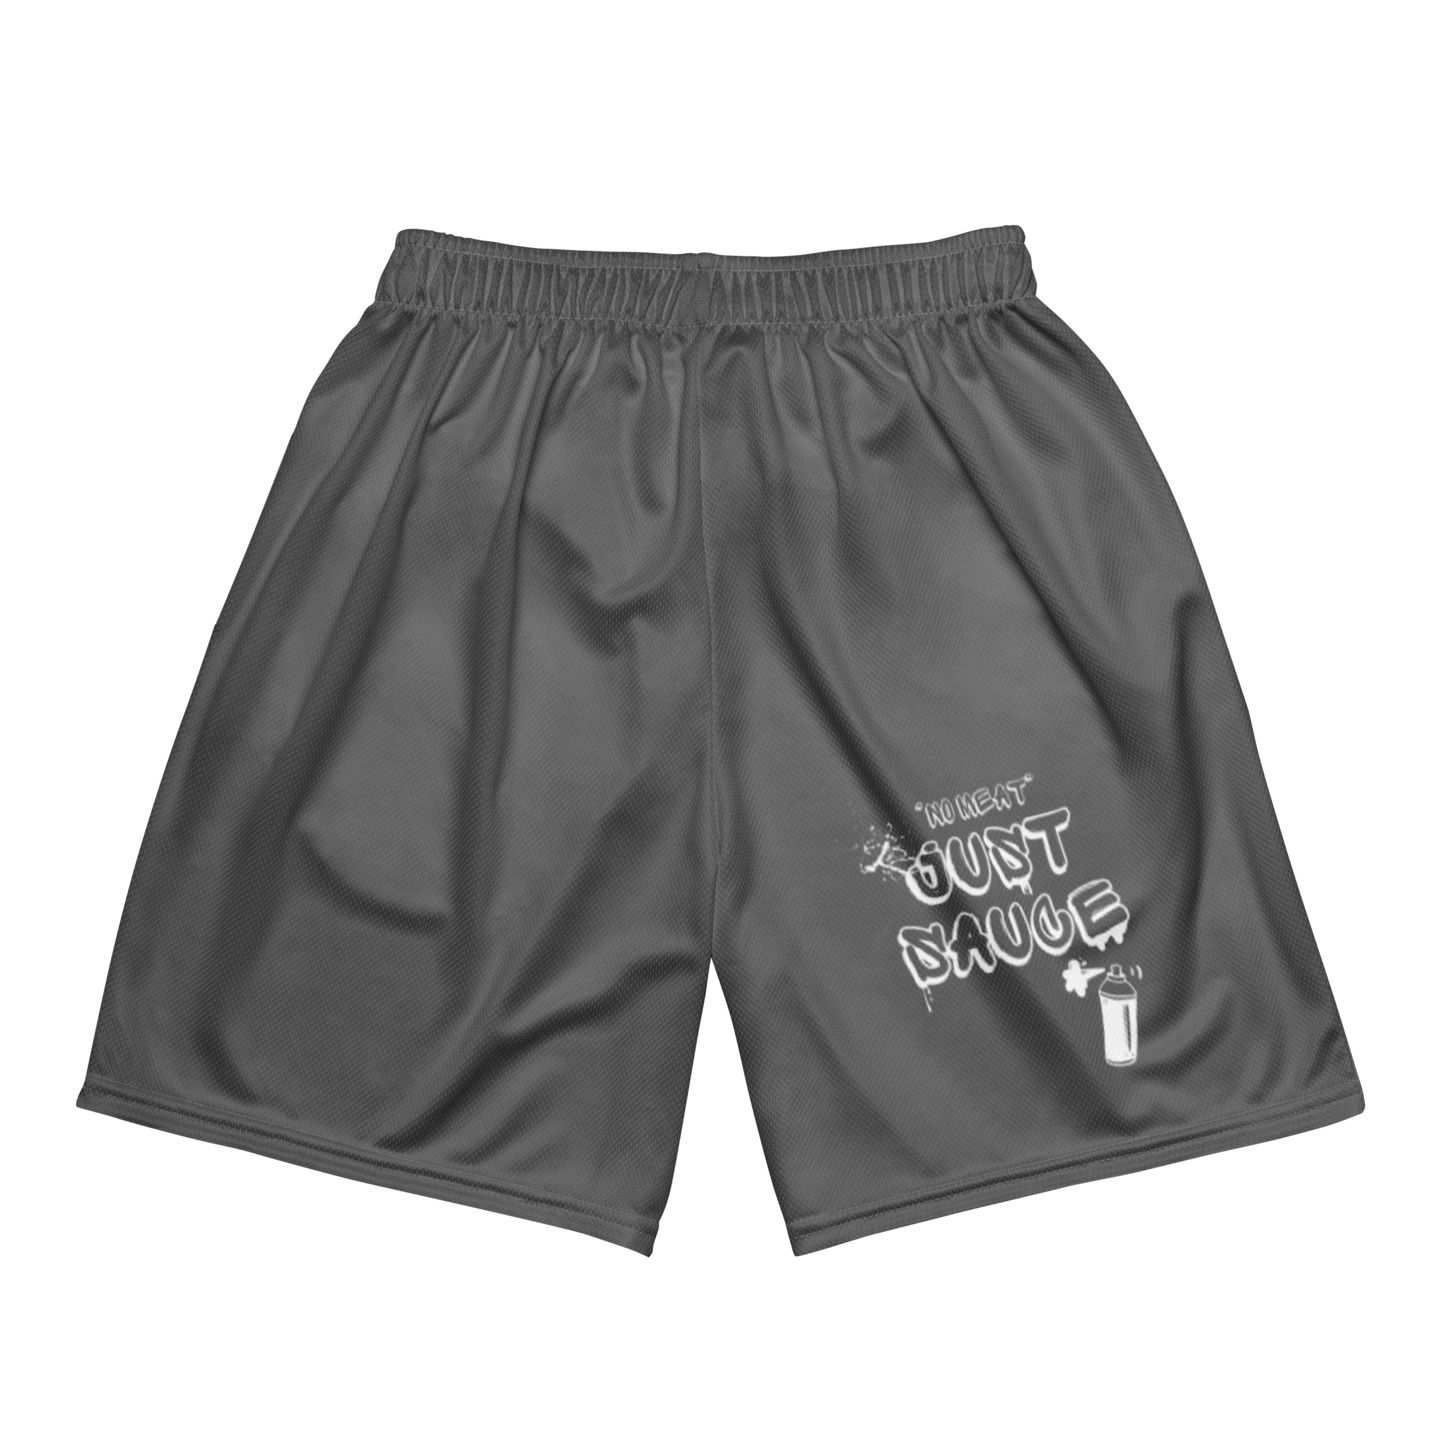 Urban Tag Unisex Mesh Shorts - Charcoal